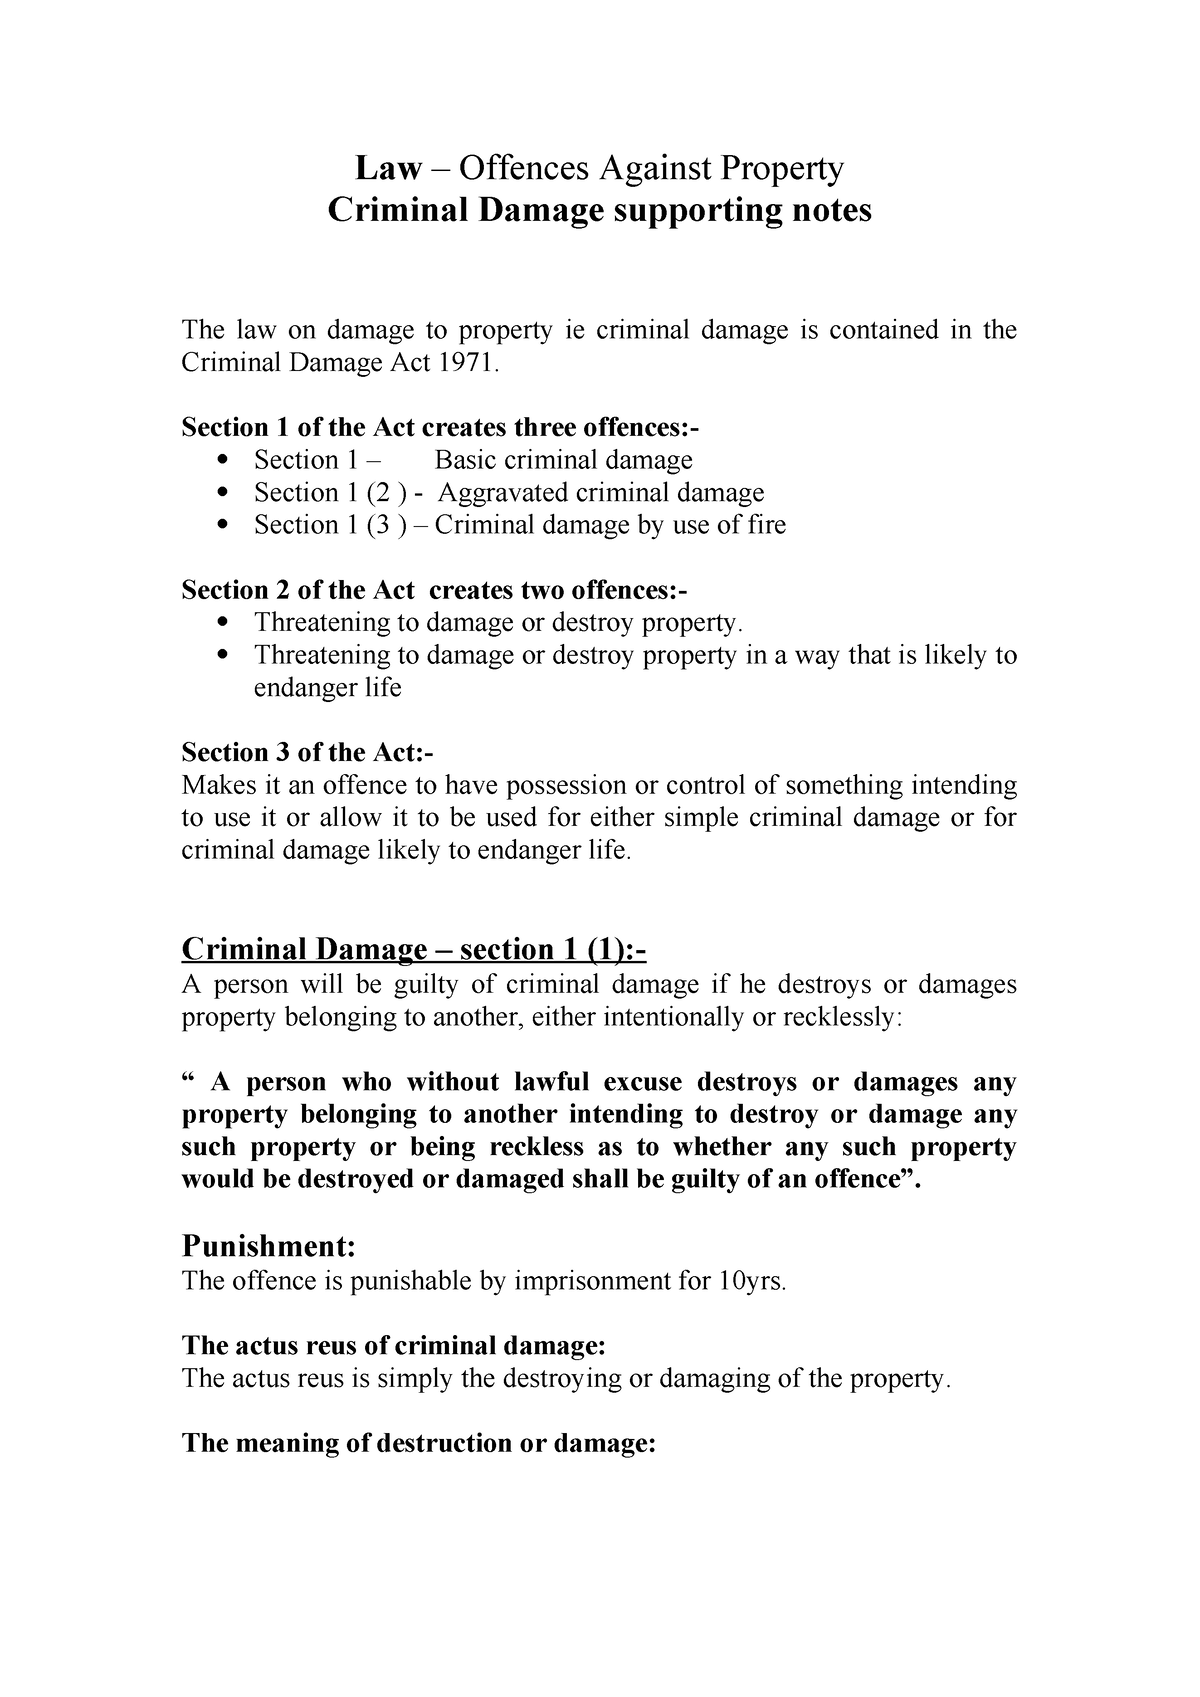 Criminal damage lecture notes - Law – Offences Against Property ...